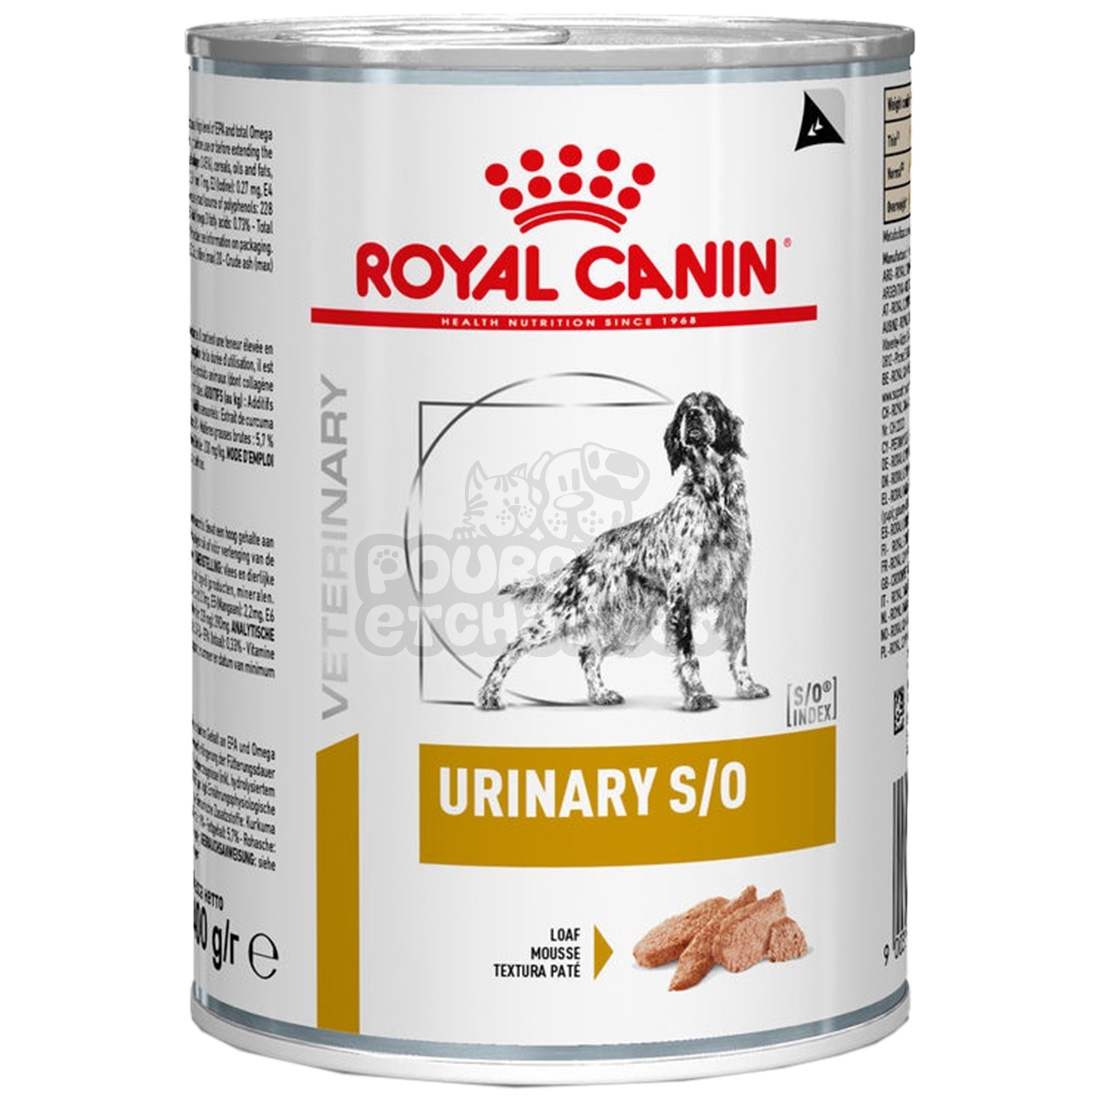 Royal Canin Urinary So Lp 18 Chien Chien Nouvelles